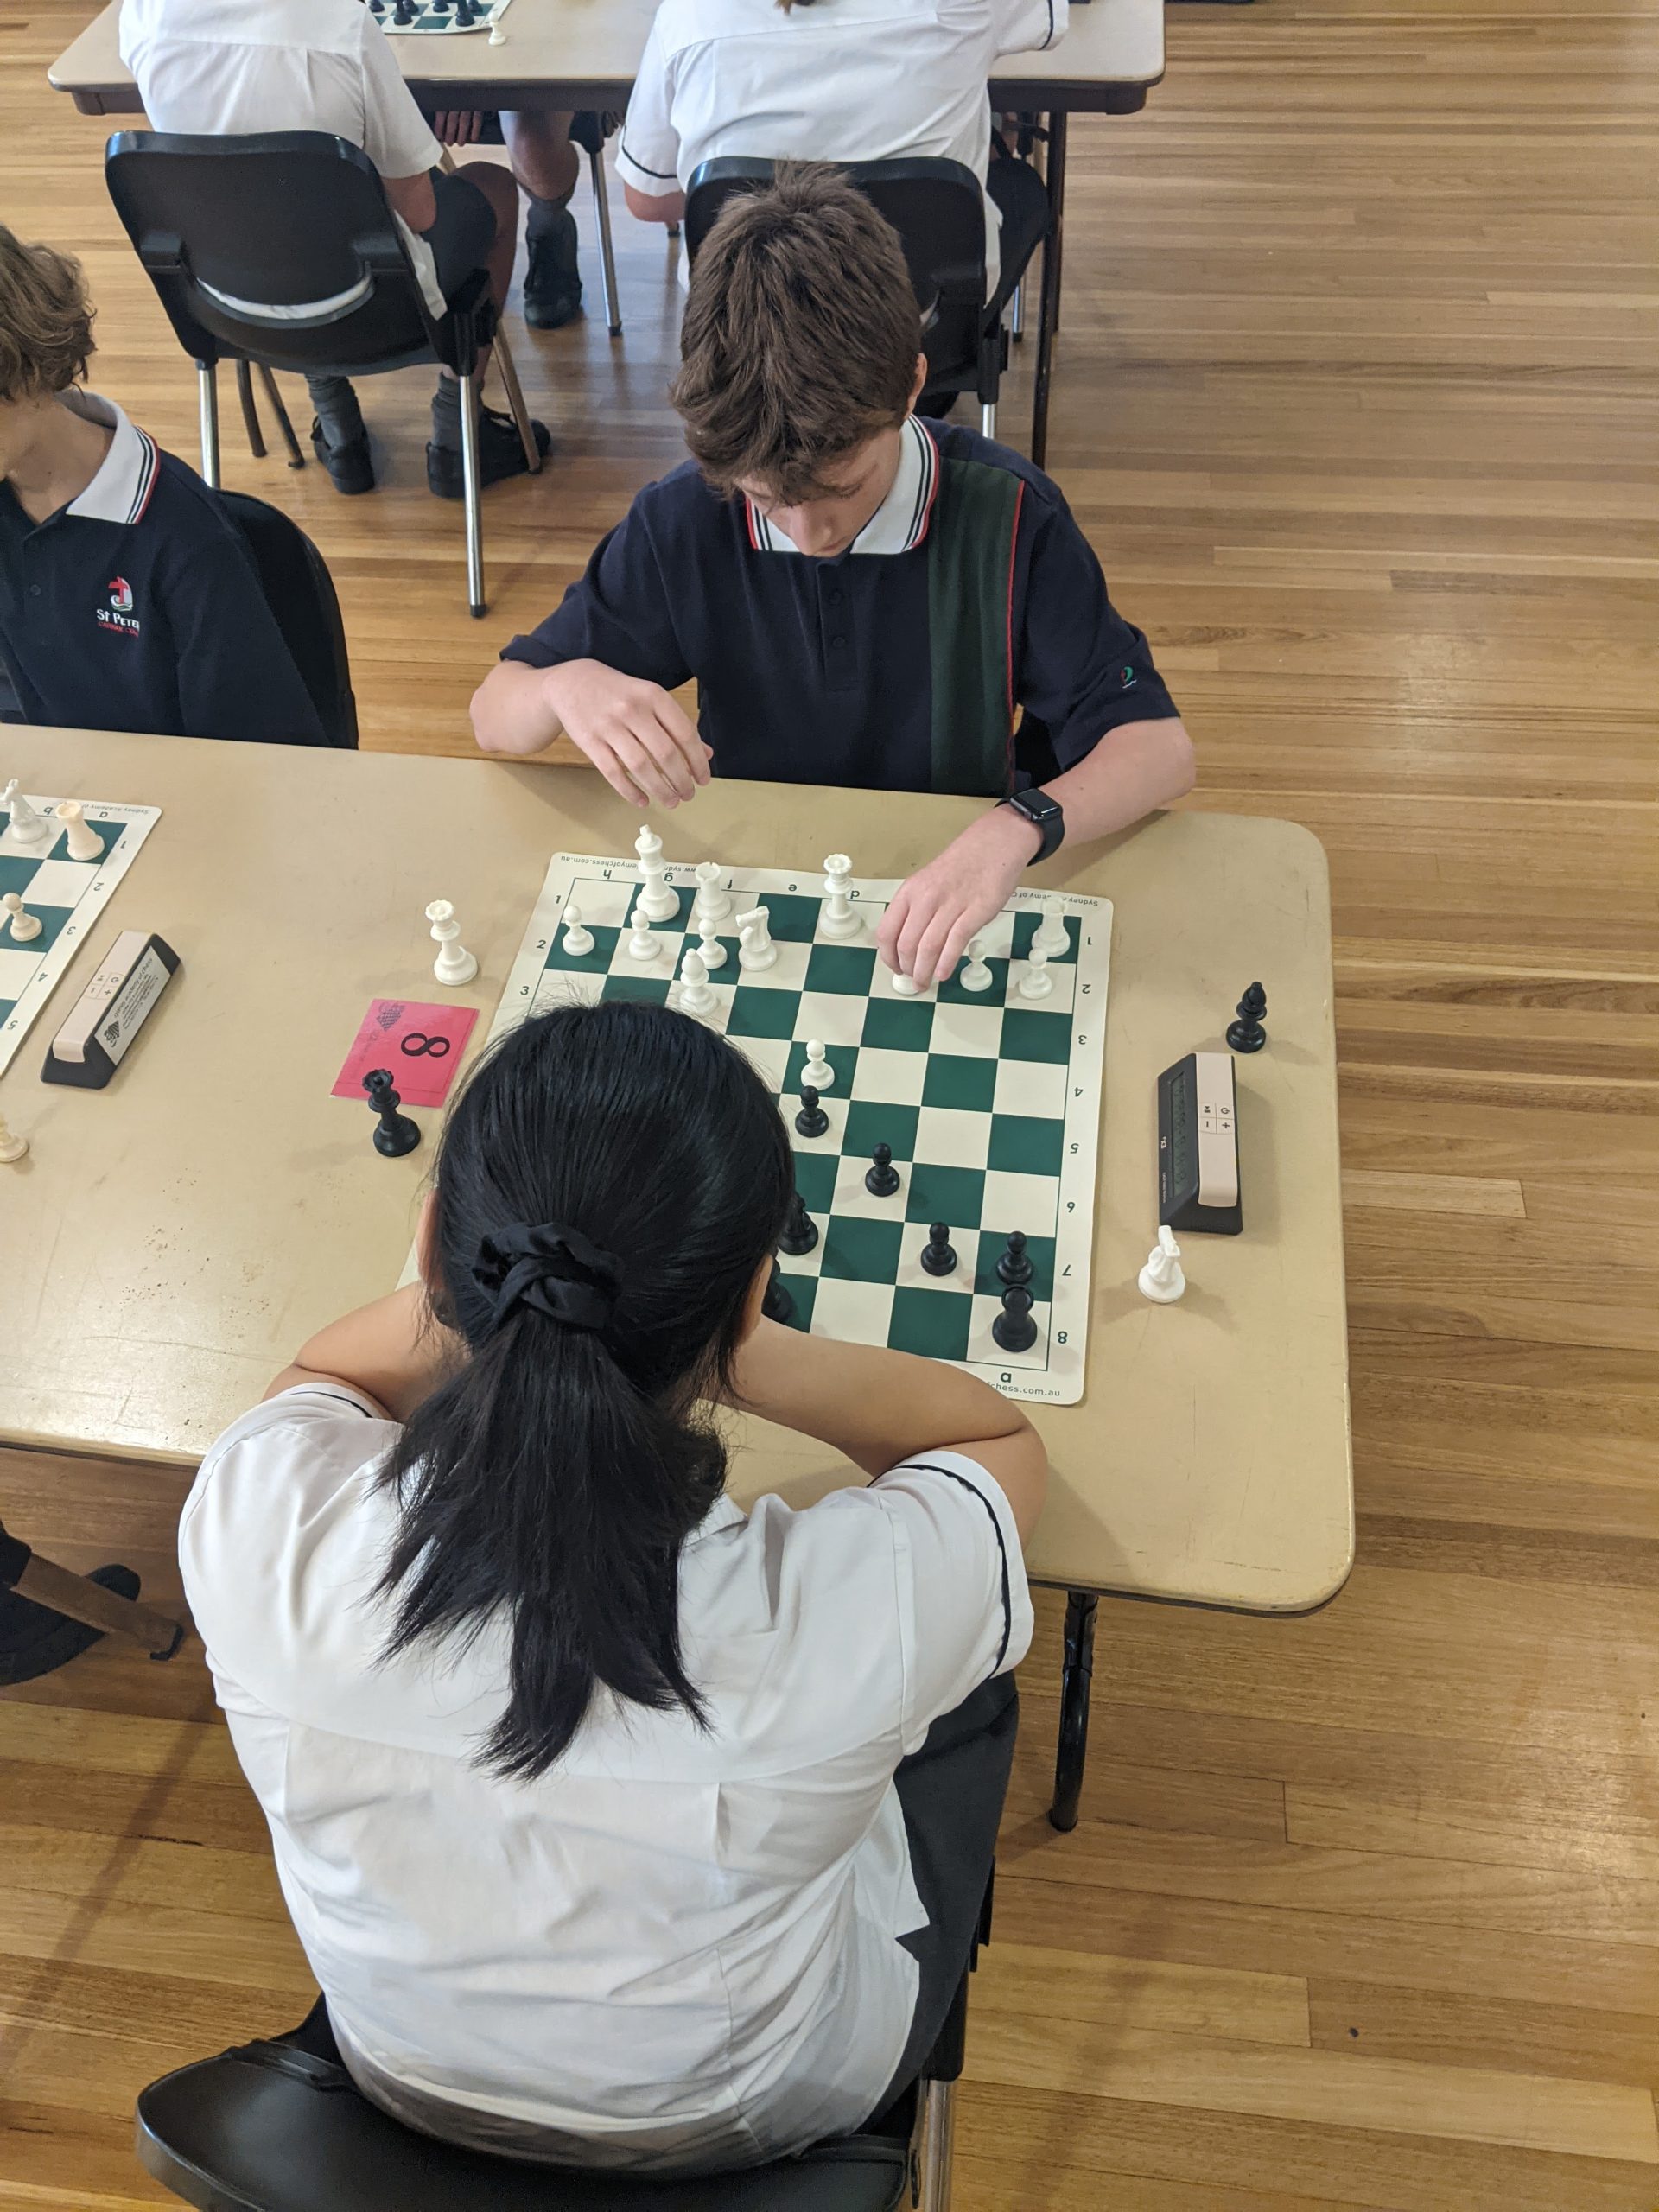 Chess Tournament - St Peter's Catholic College